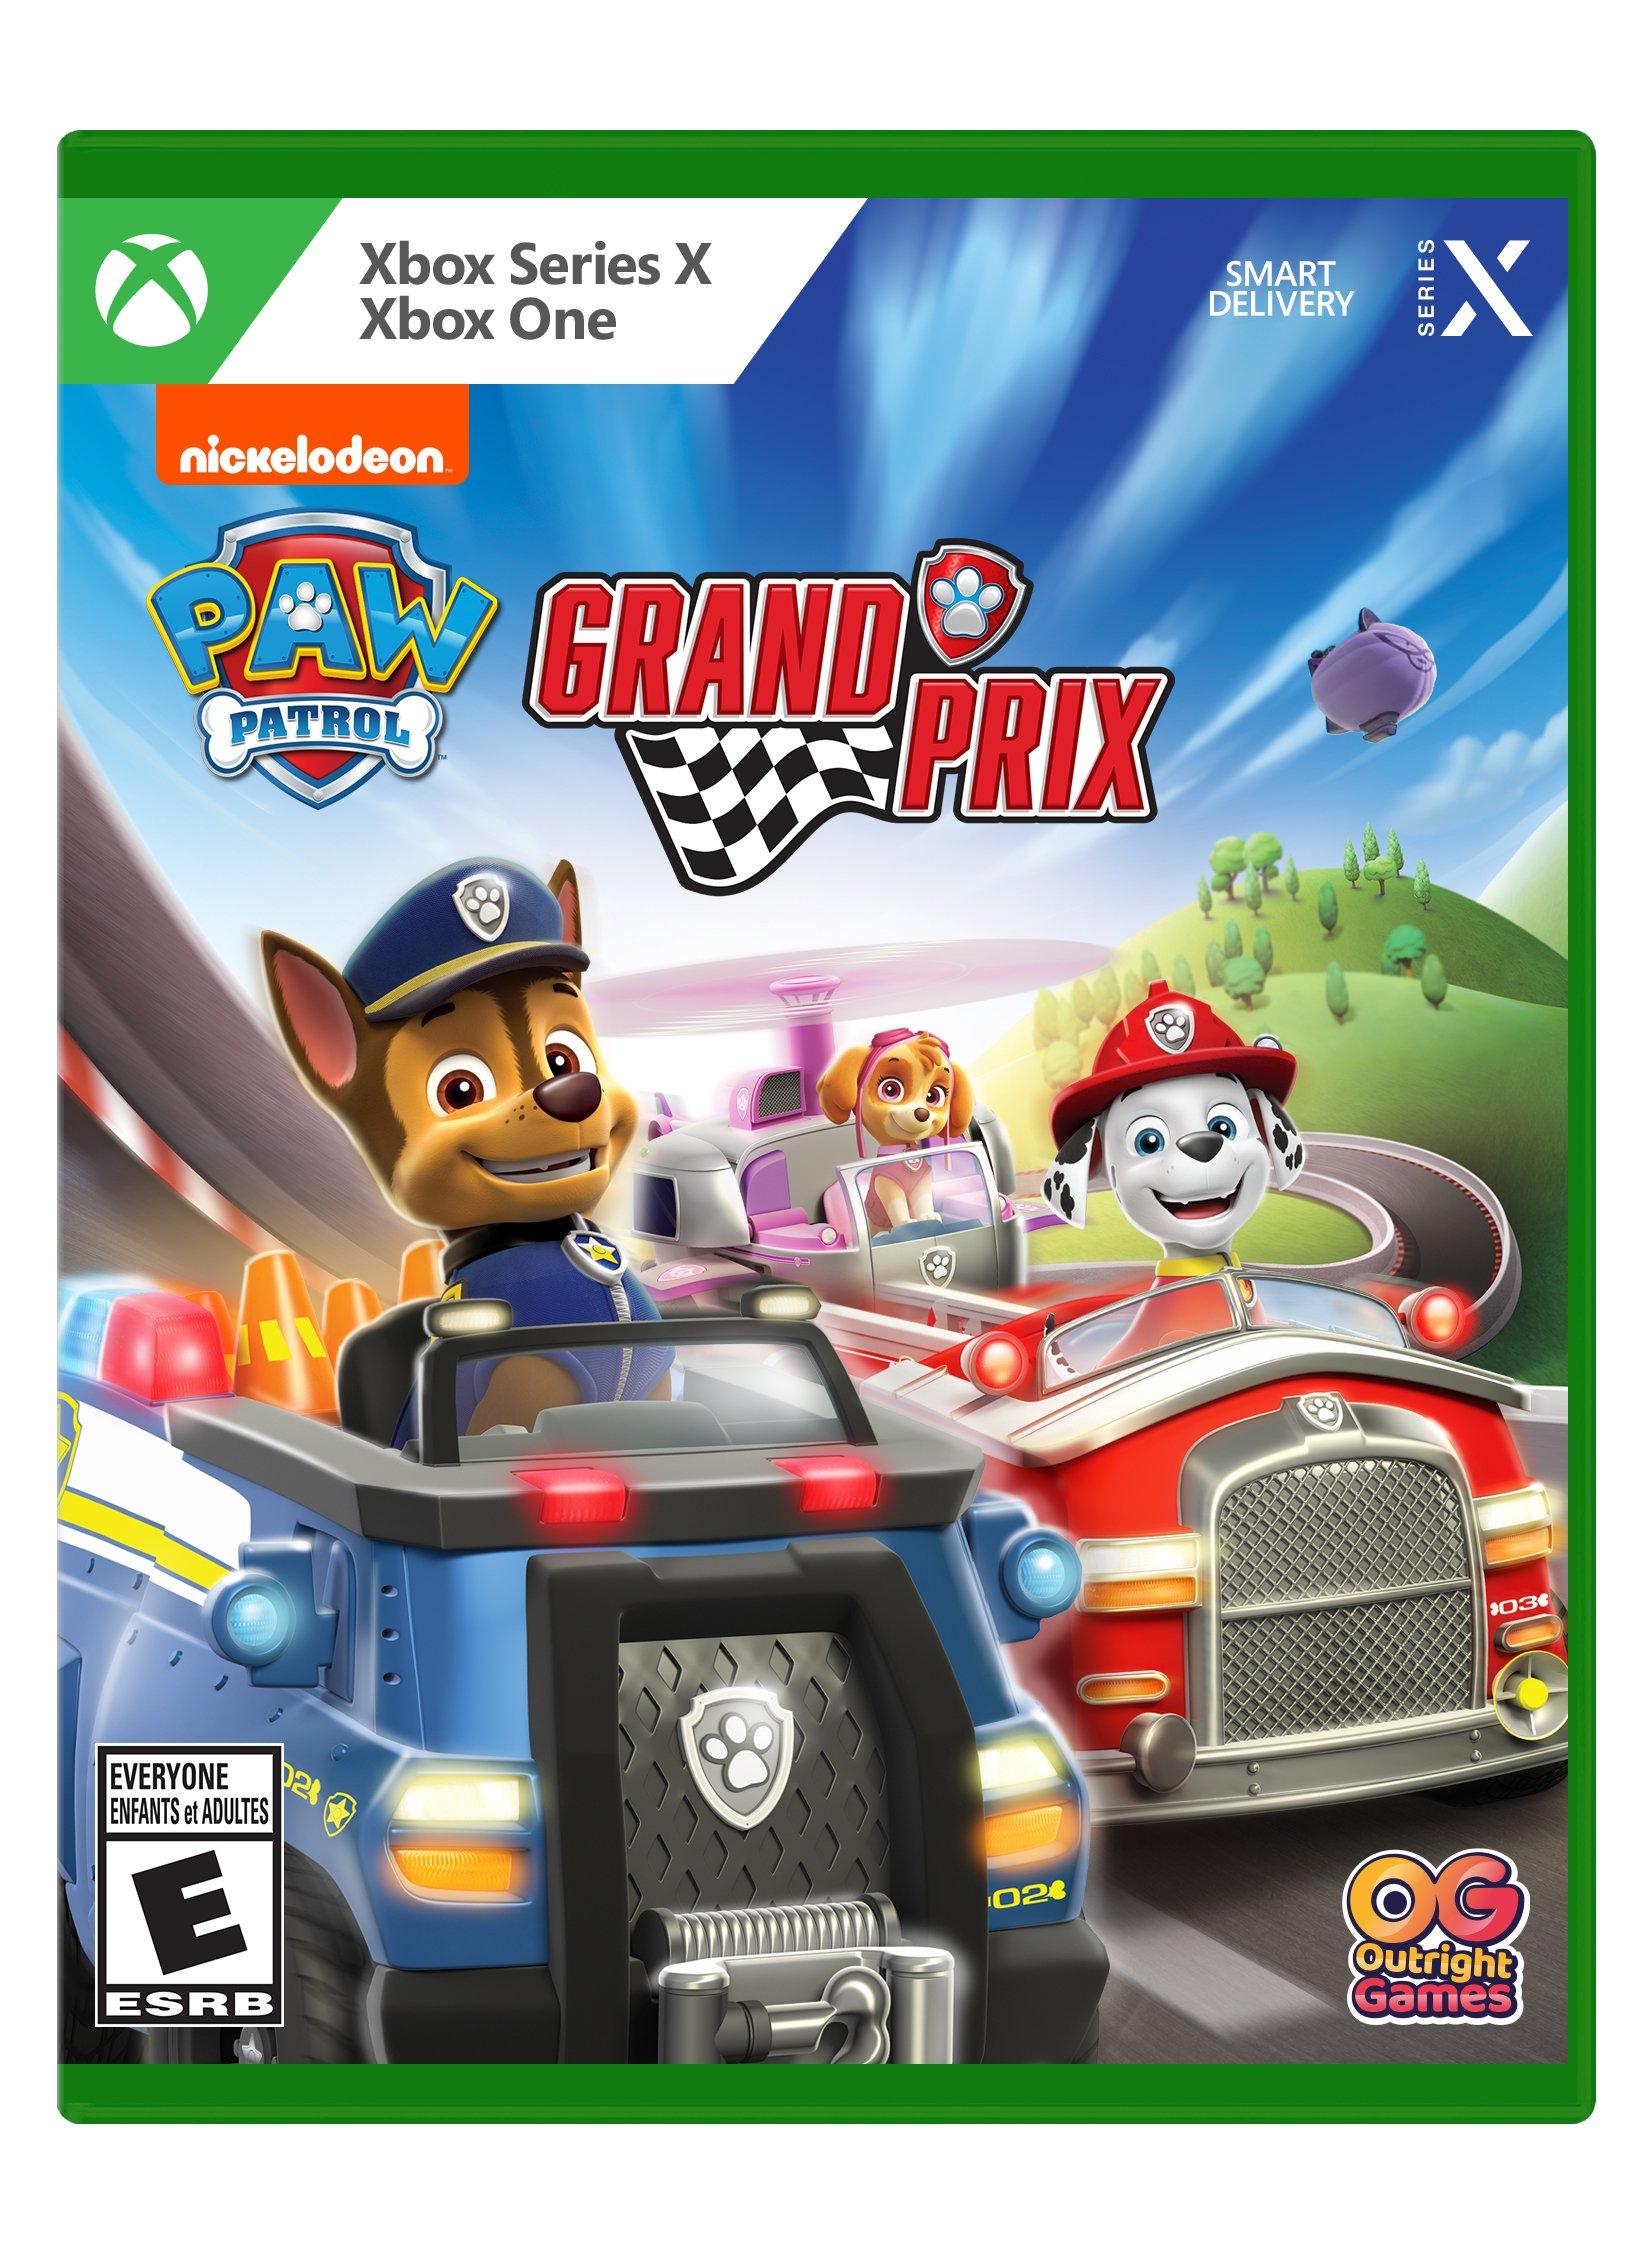 Patrol Xbox Paw Prix Xbox Grand Series Series X, - | Xbox GameStop X | One